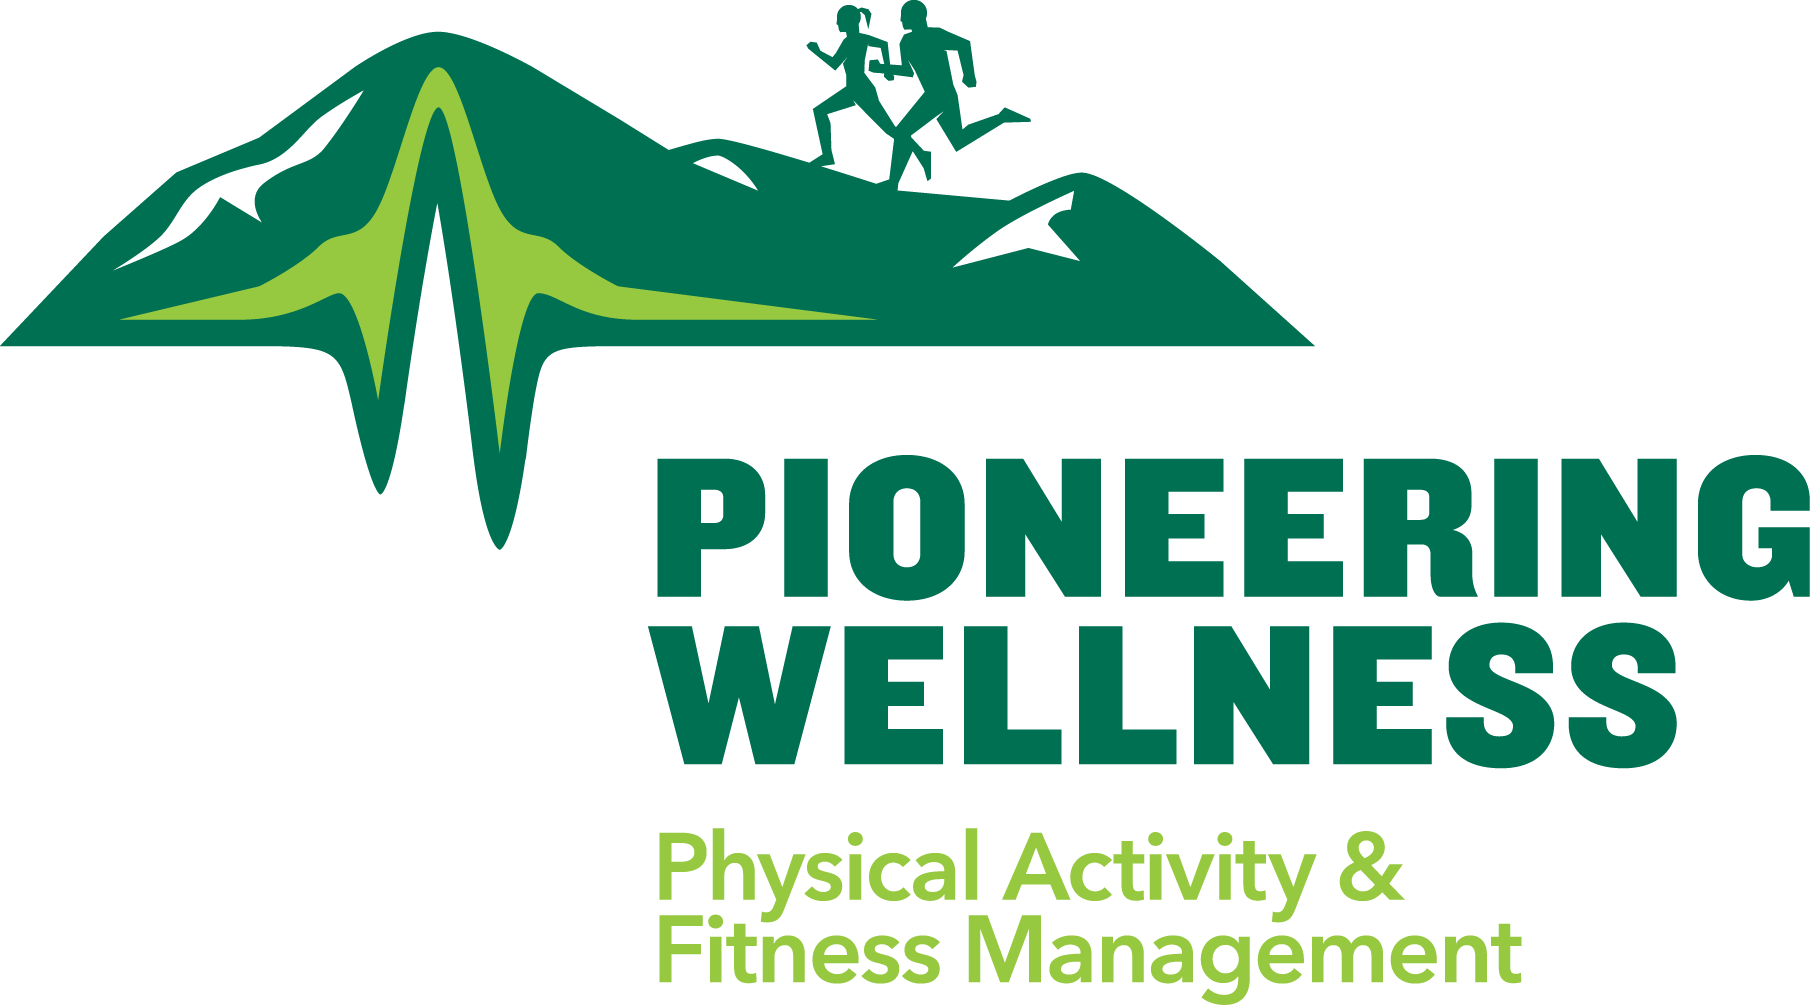 Pioneering wellness logo